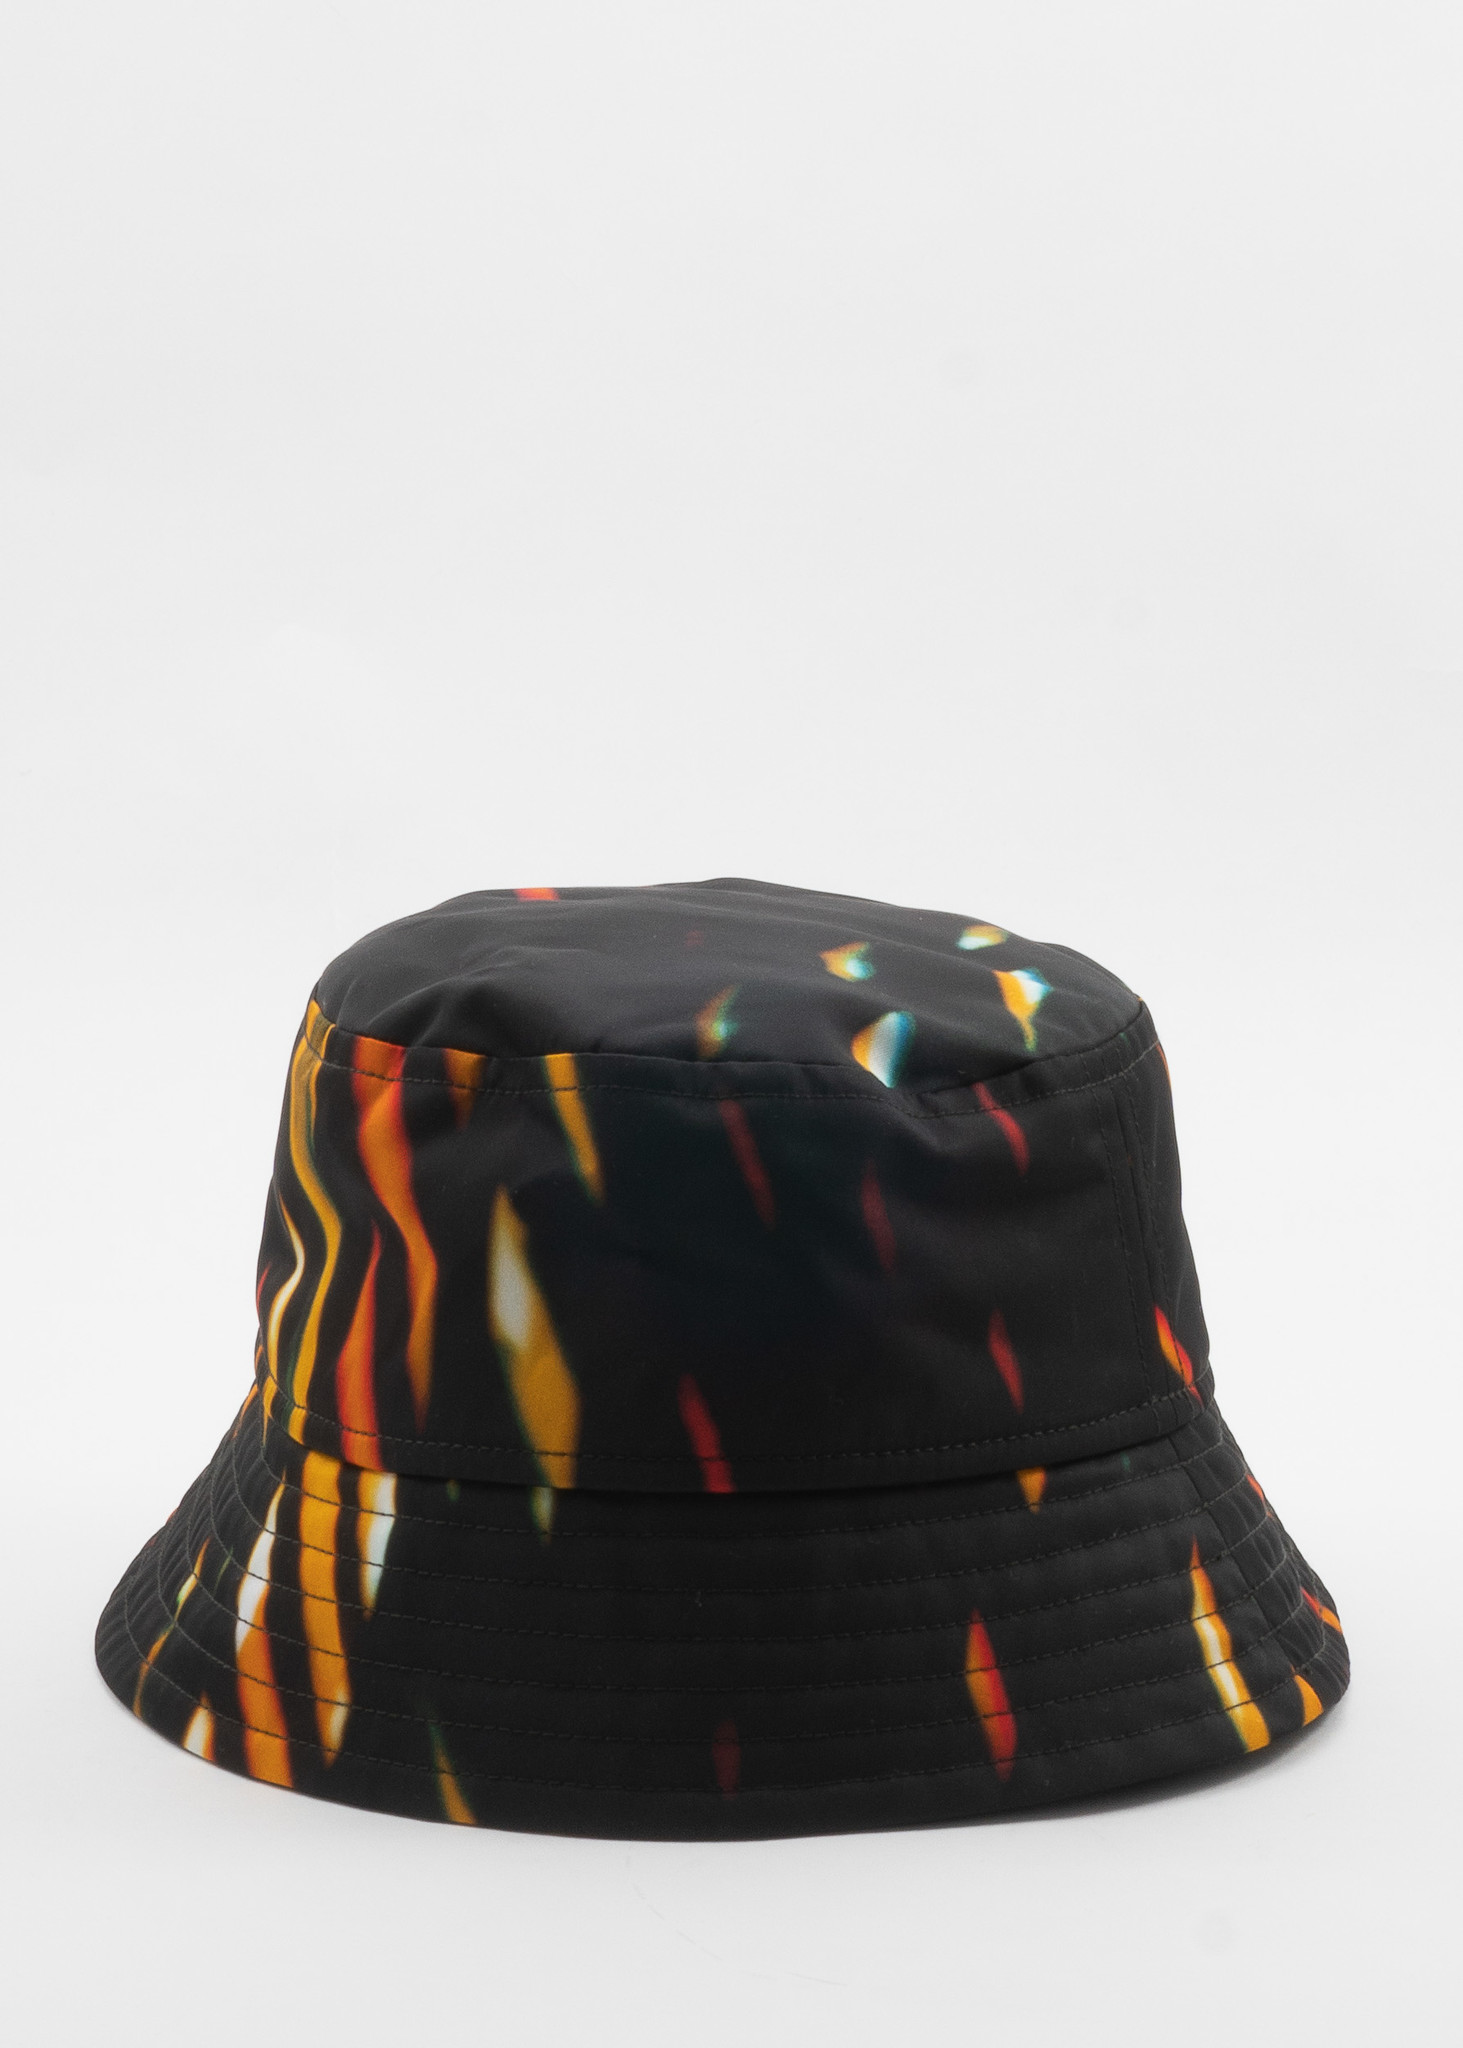 Multicolored Len Lye Edition Graphic Nylon Bucket Hat